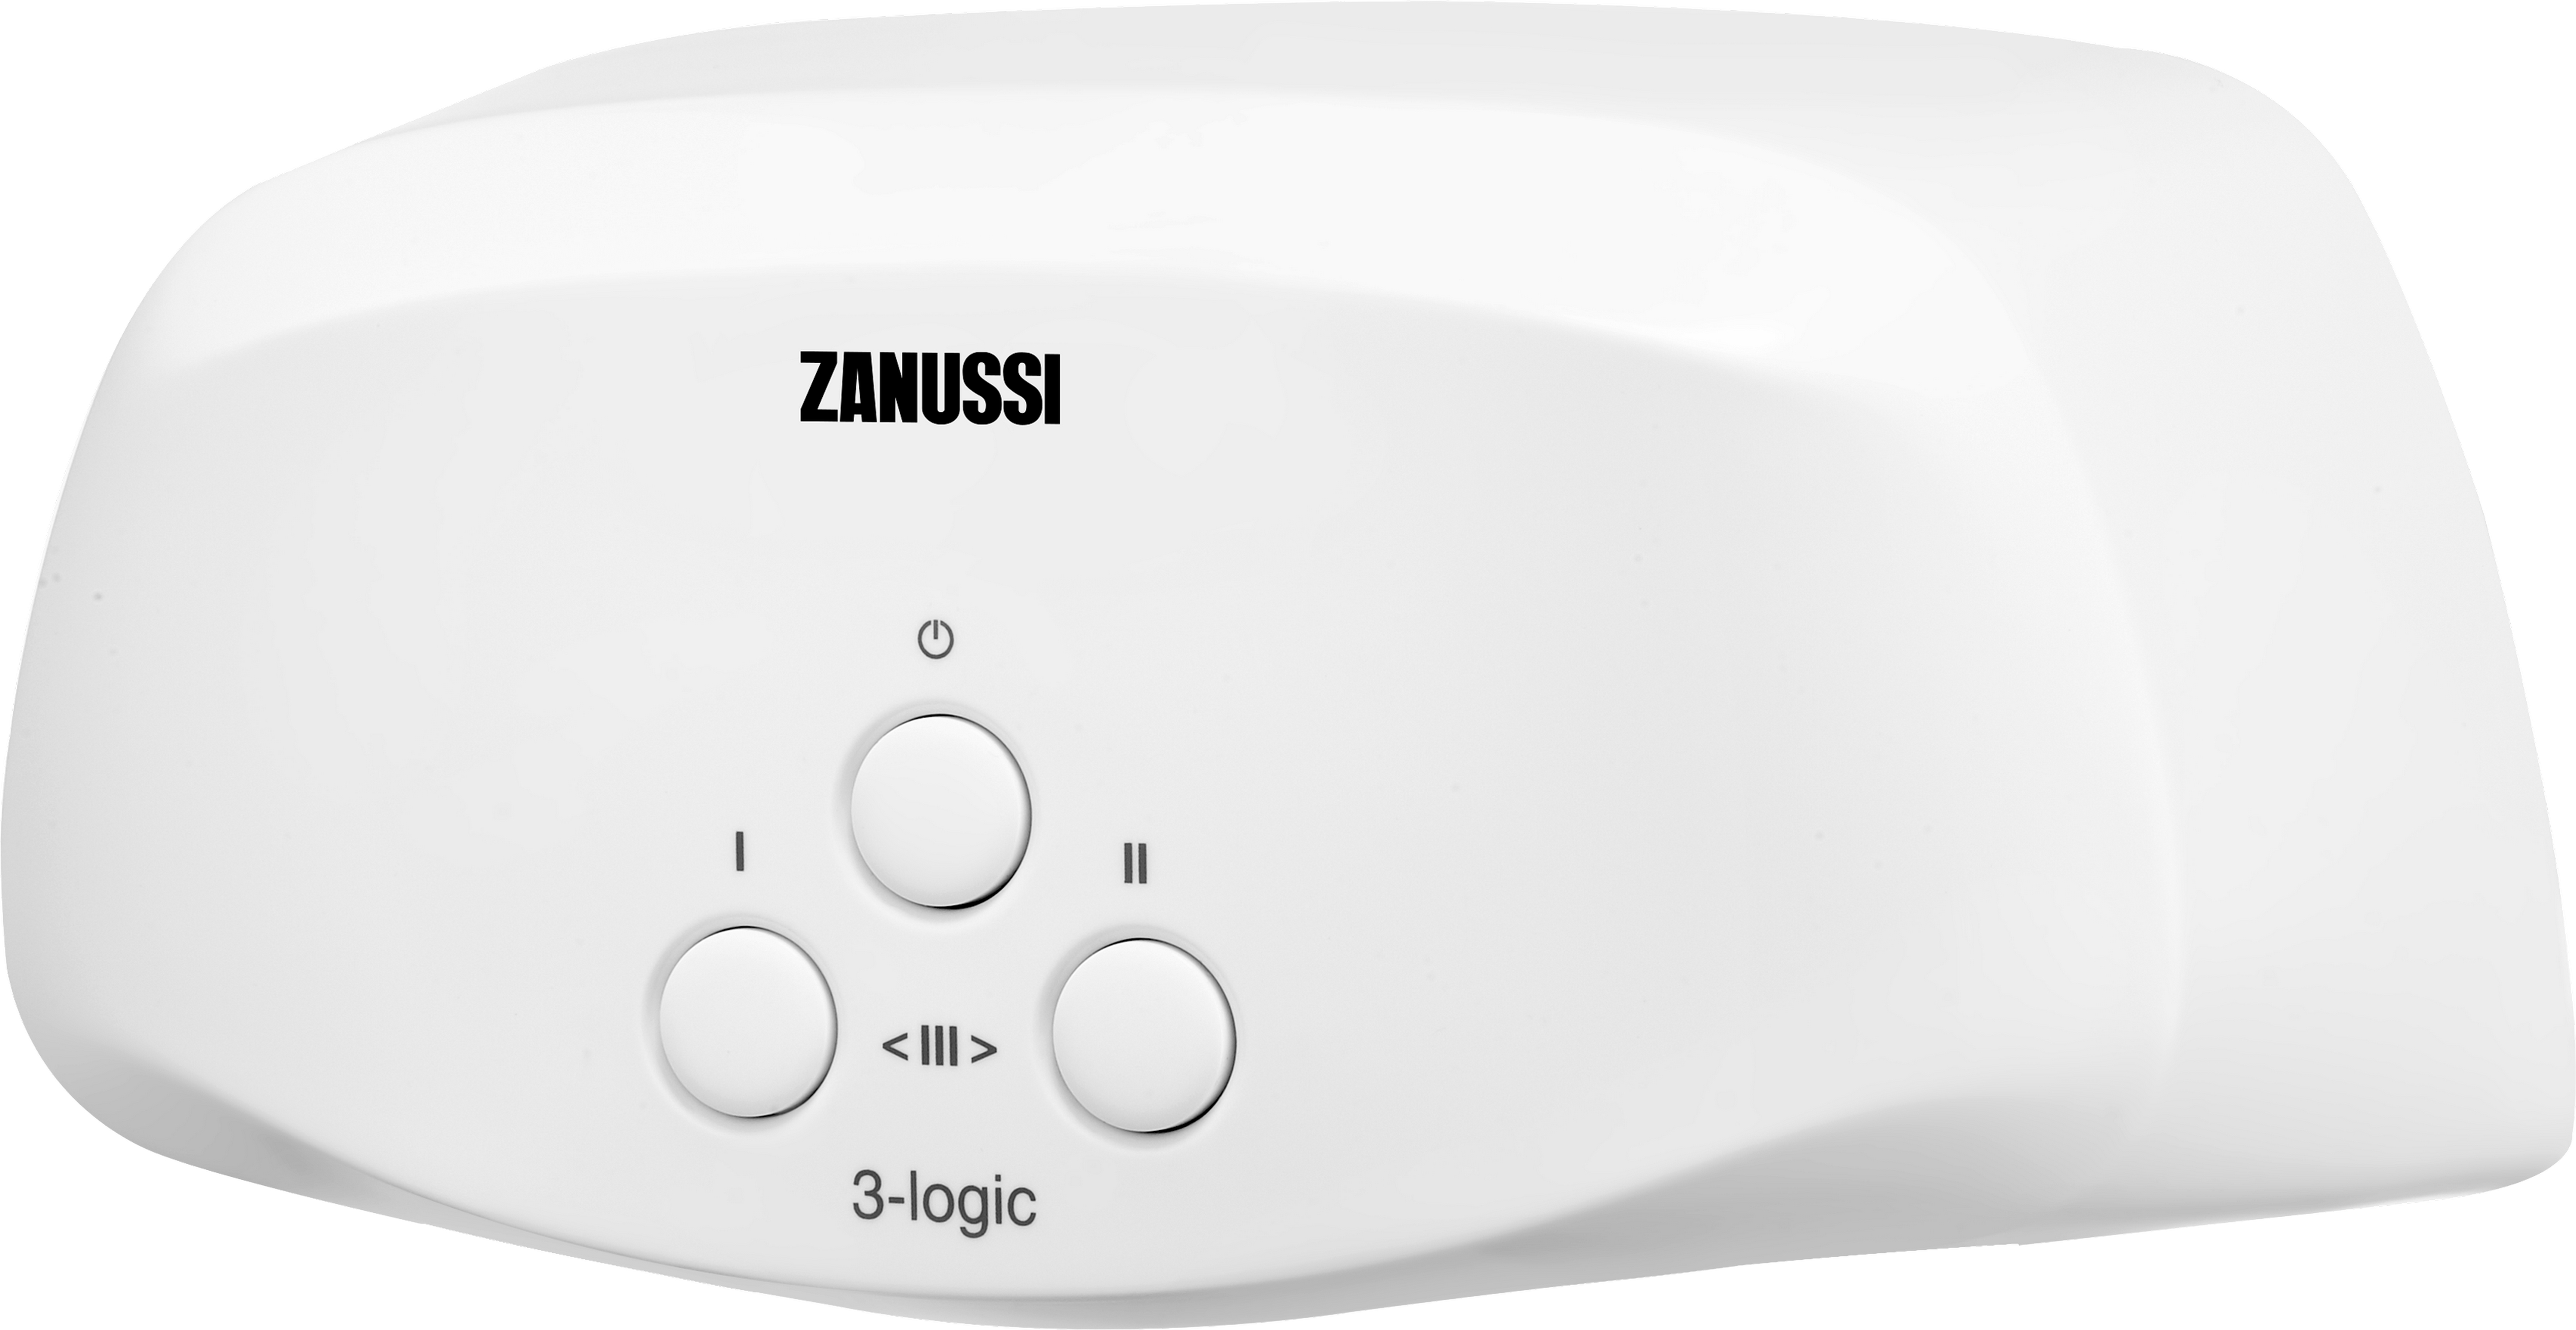 Проточный водонагреватель Zanussi 3-logic TS (5,5 кВт) цена 0.00 грн - фотография 2